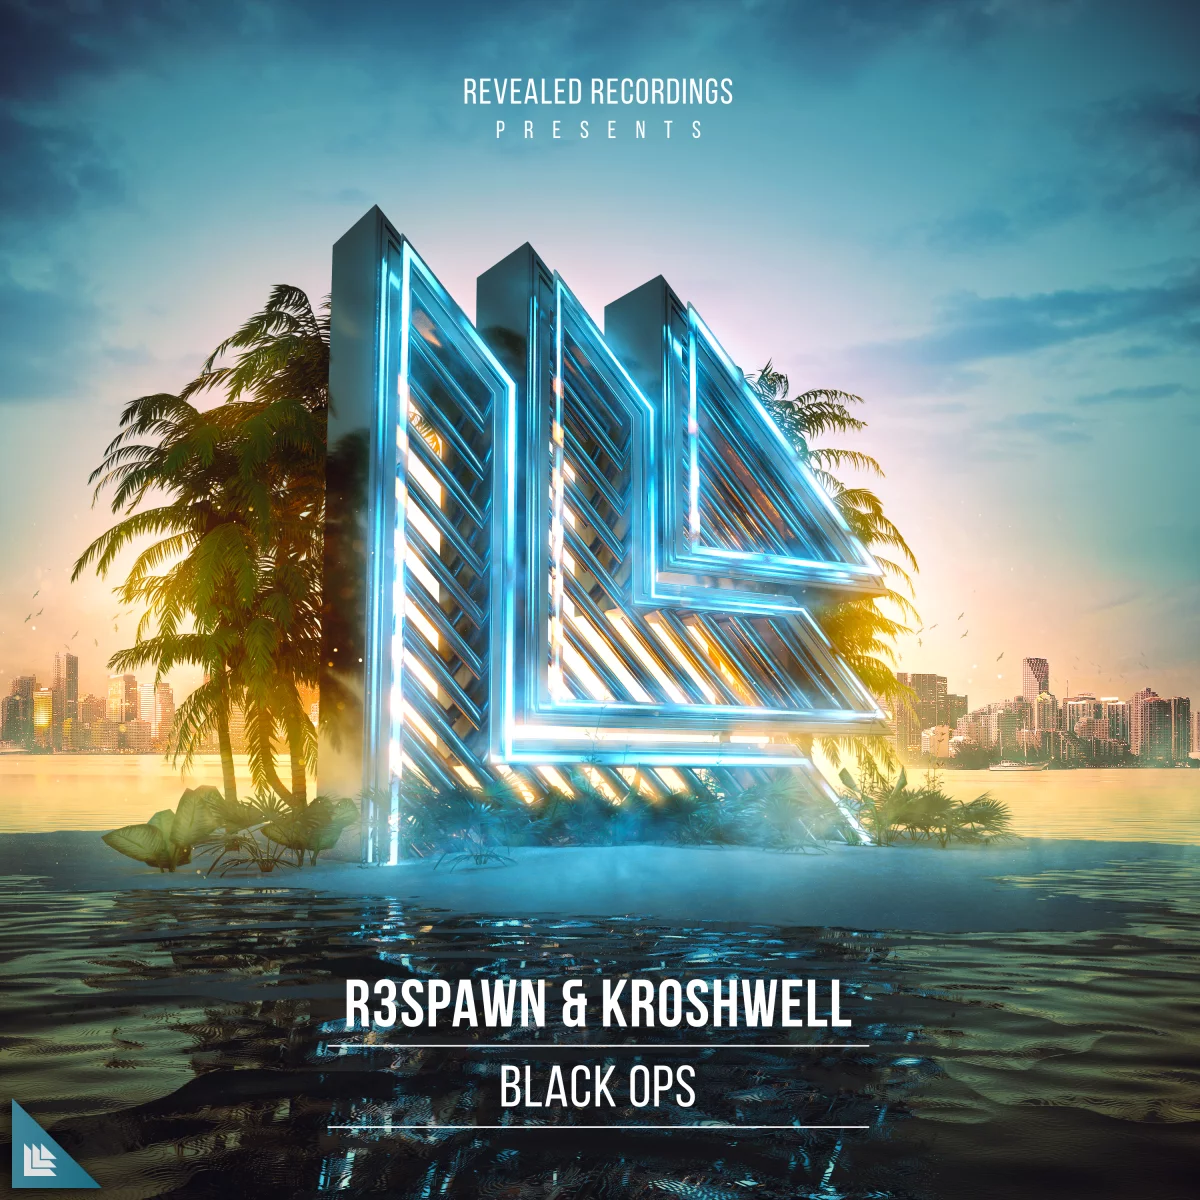 Black Ops - R3spawnmusic⁠ & Kroshwell⁠ 